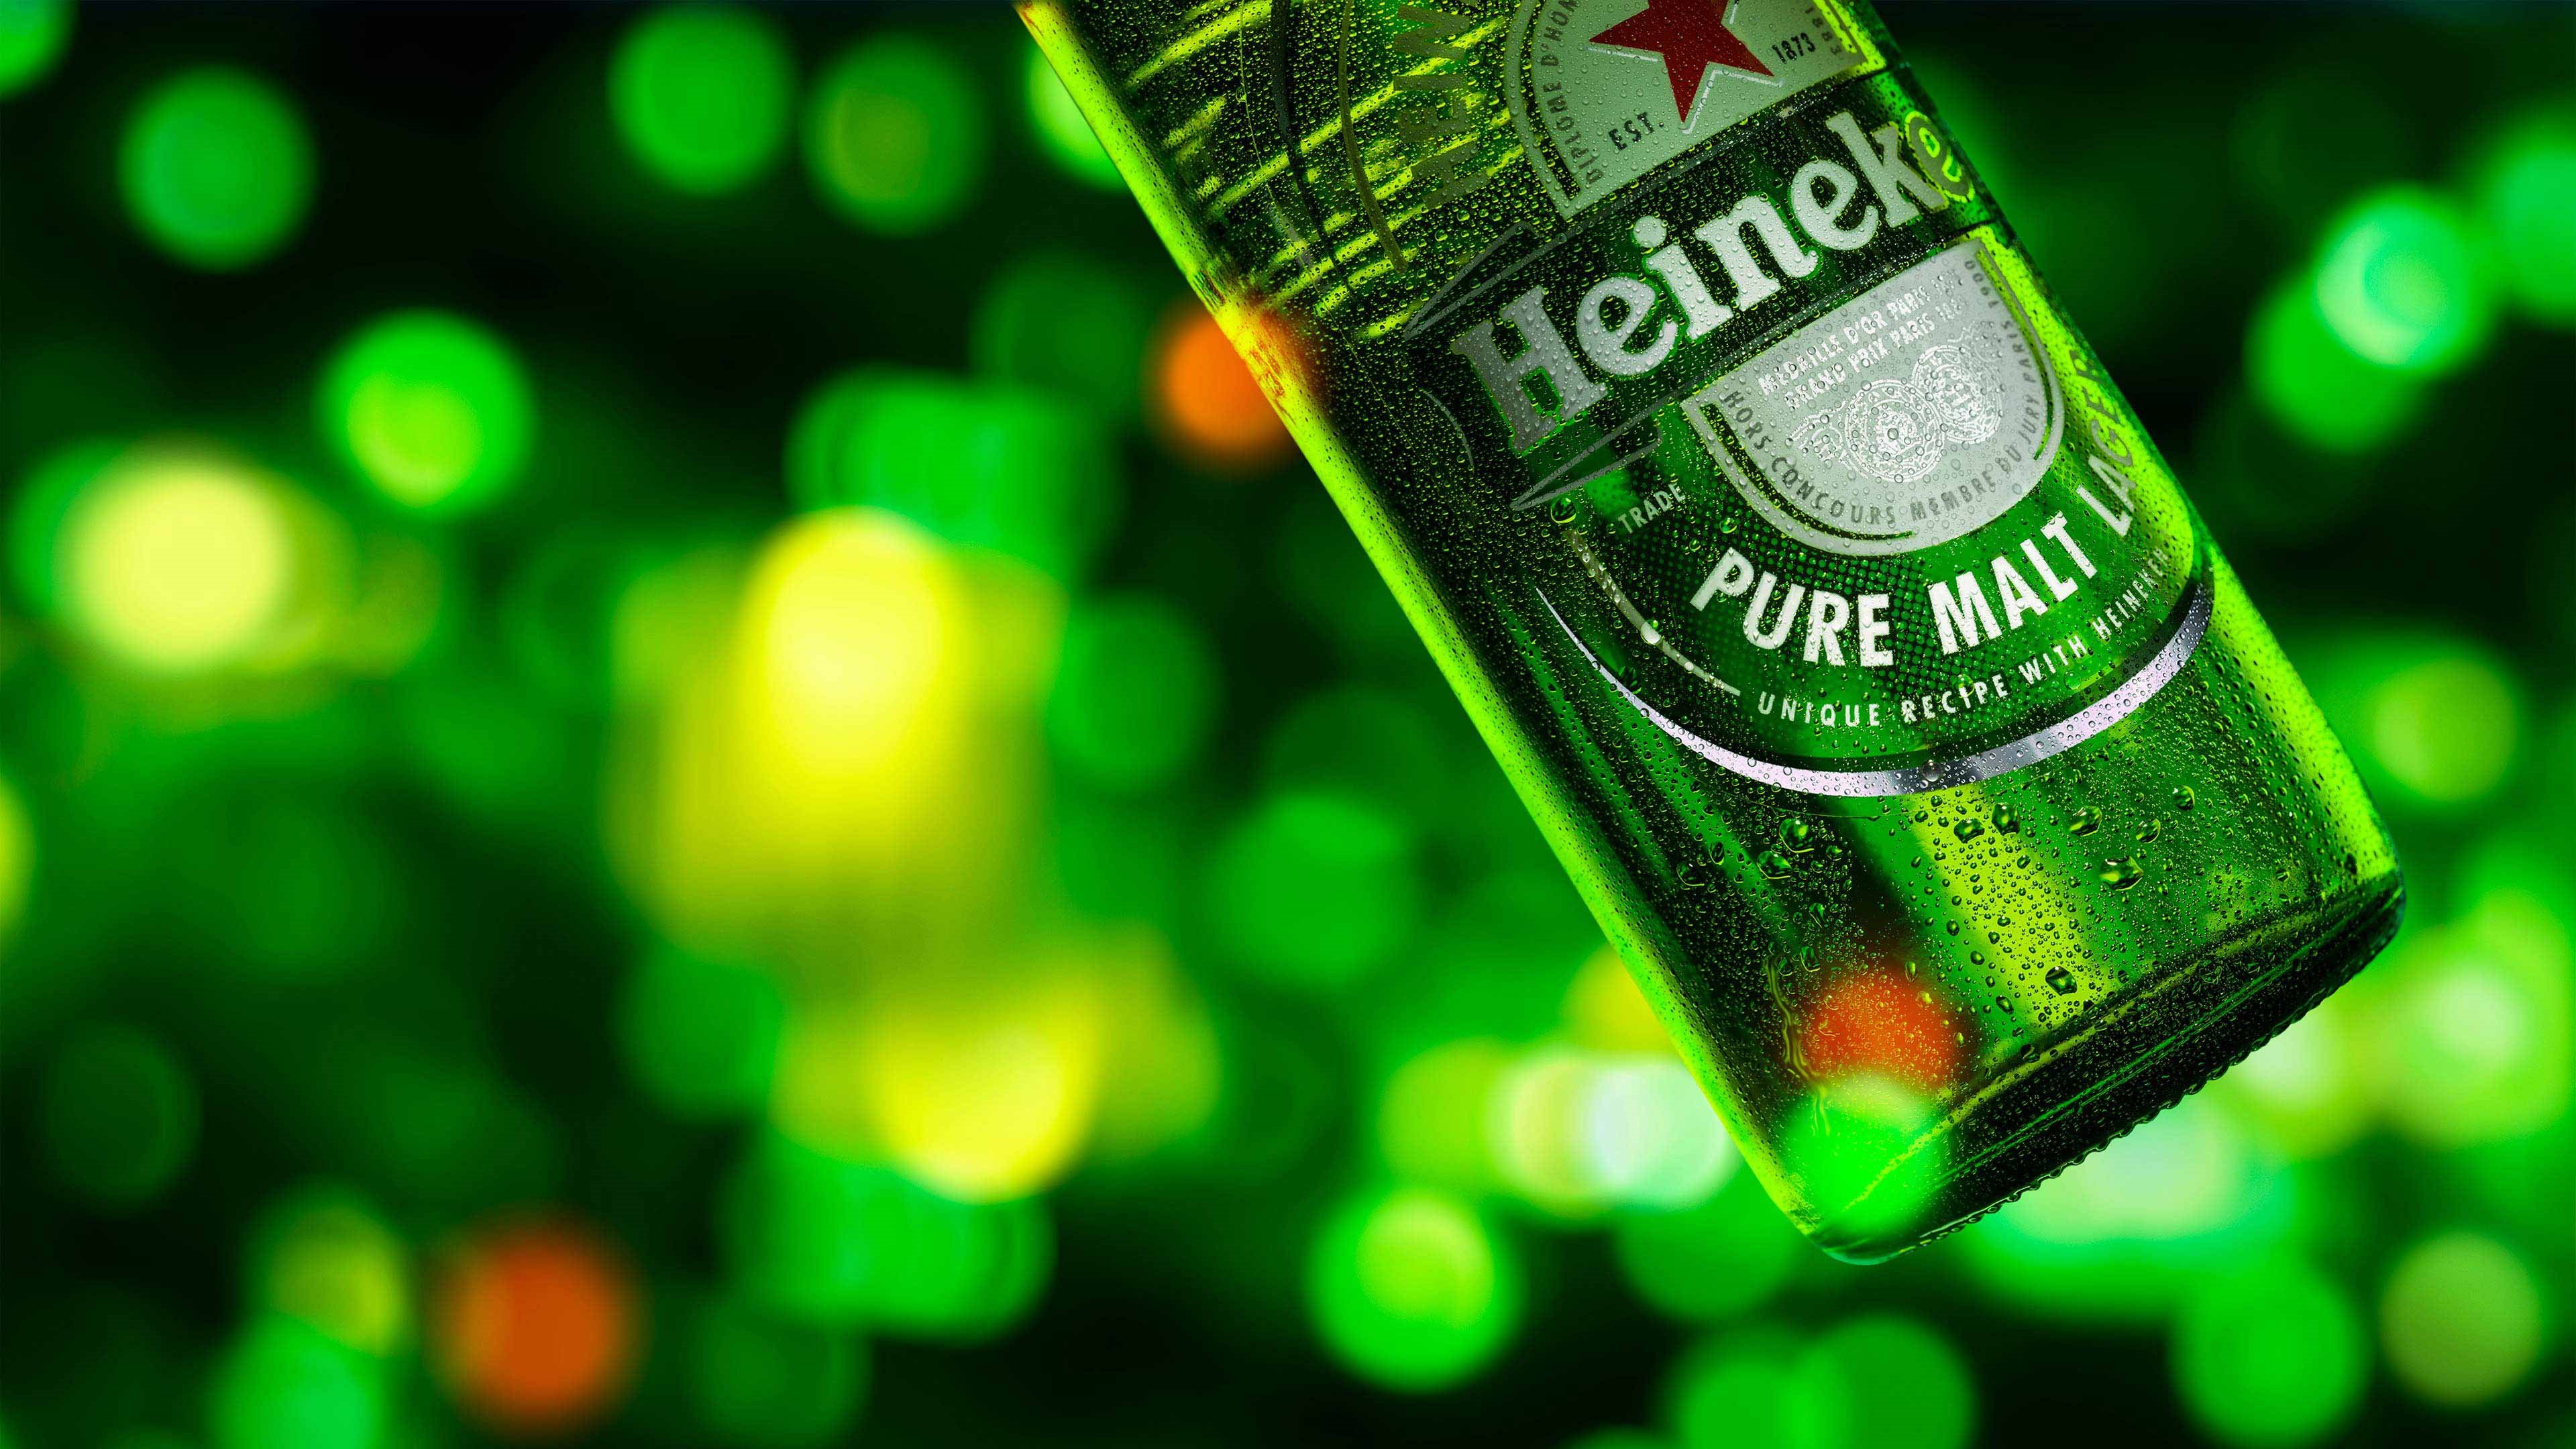 Heineken is brewed from pure malt - bottle